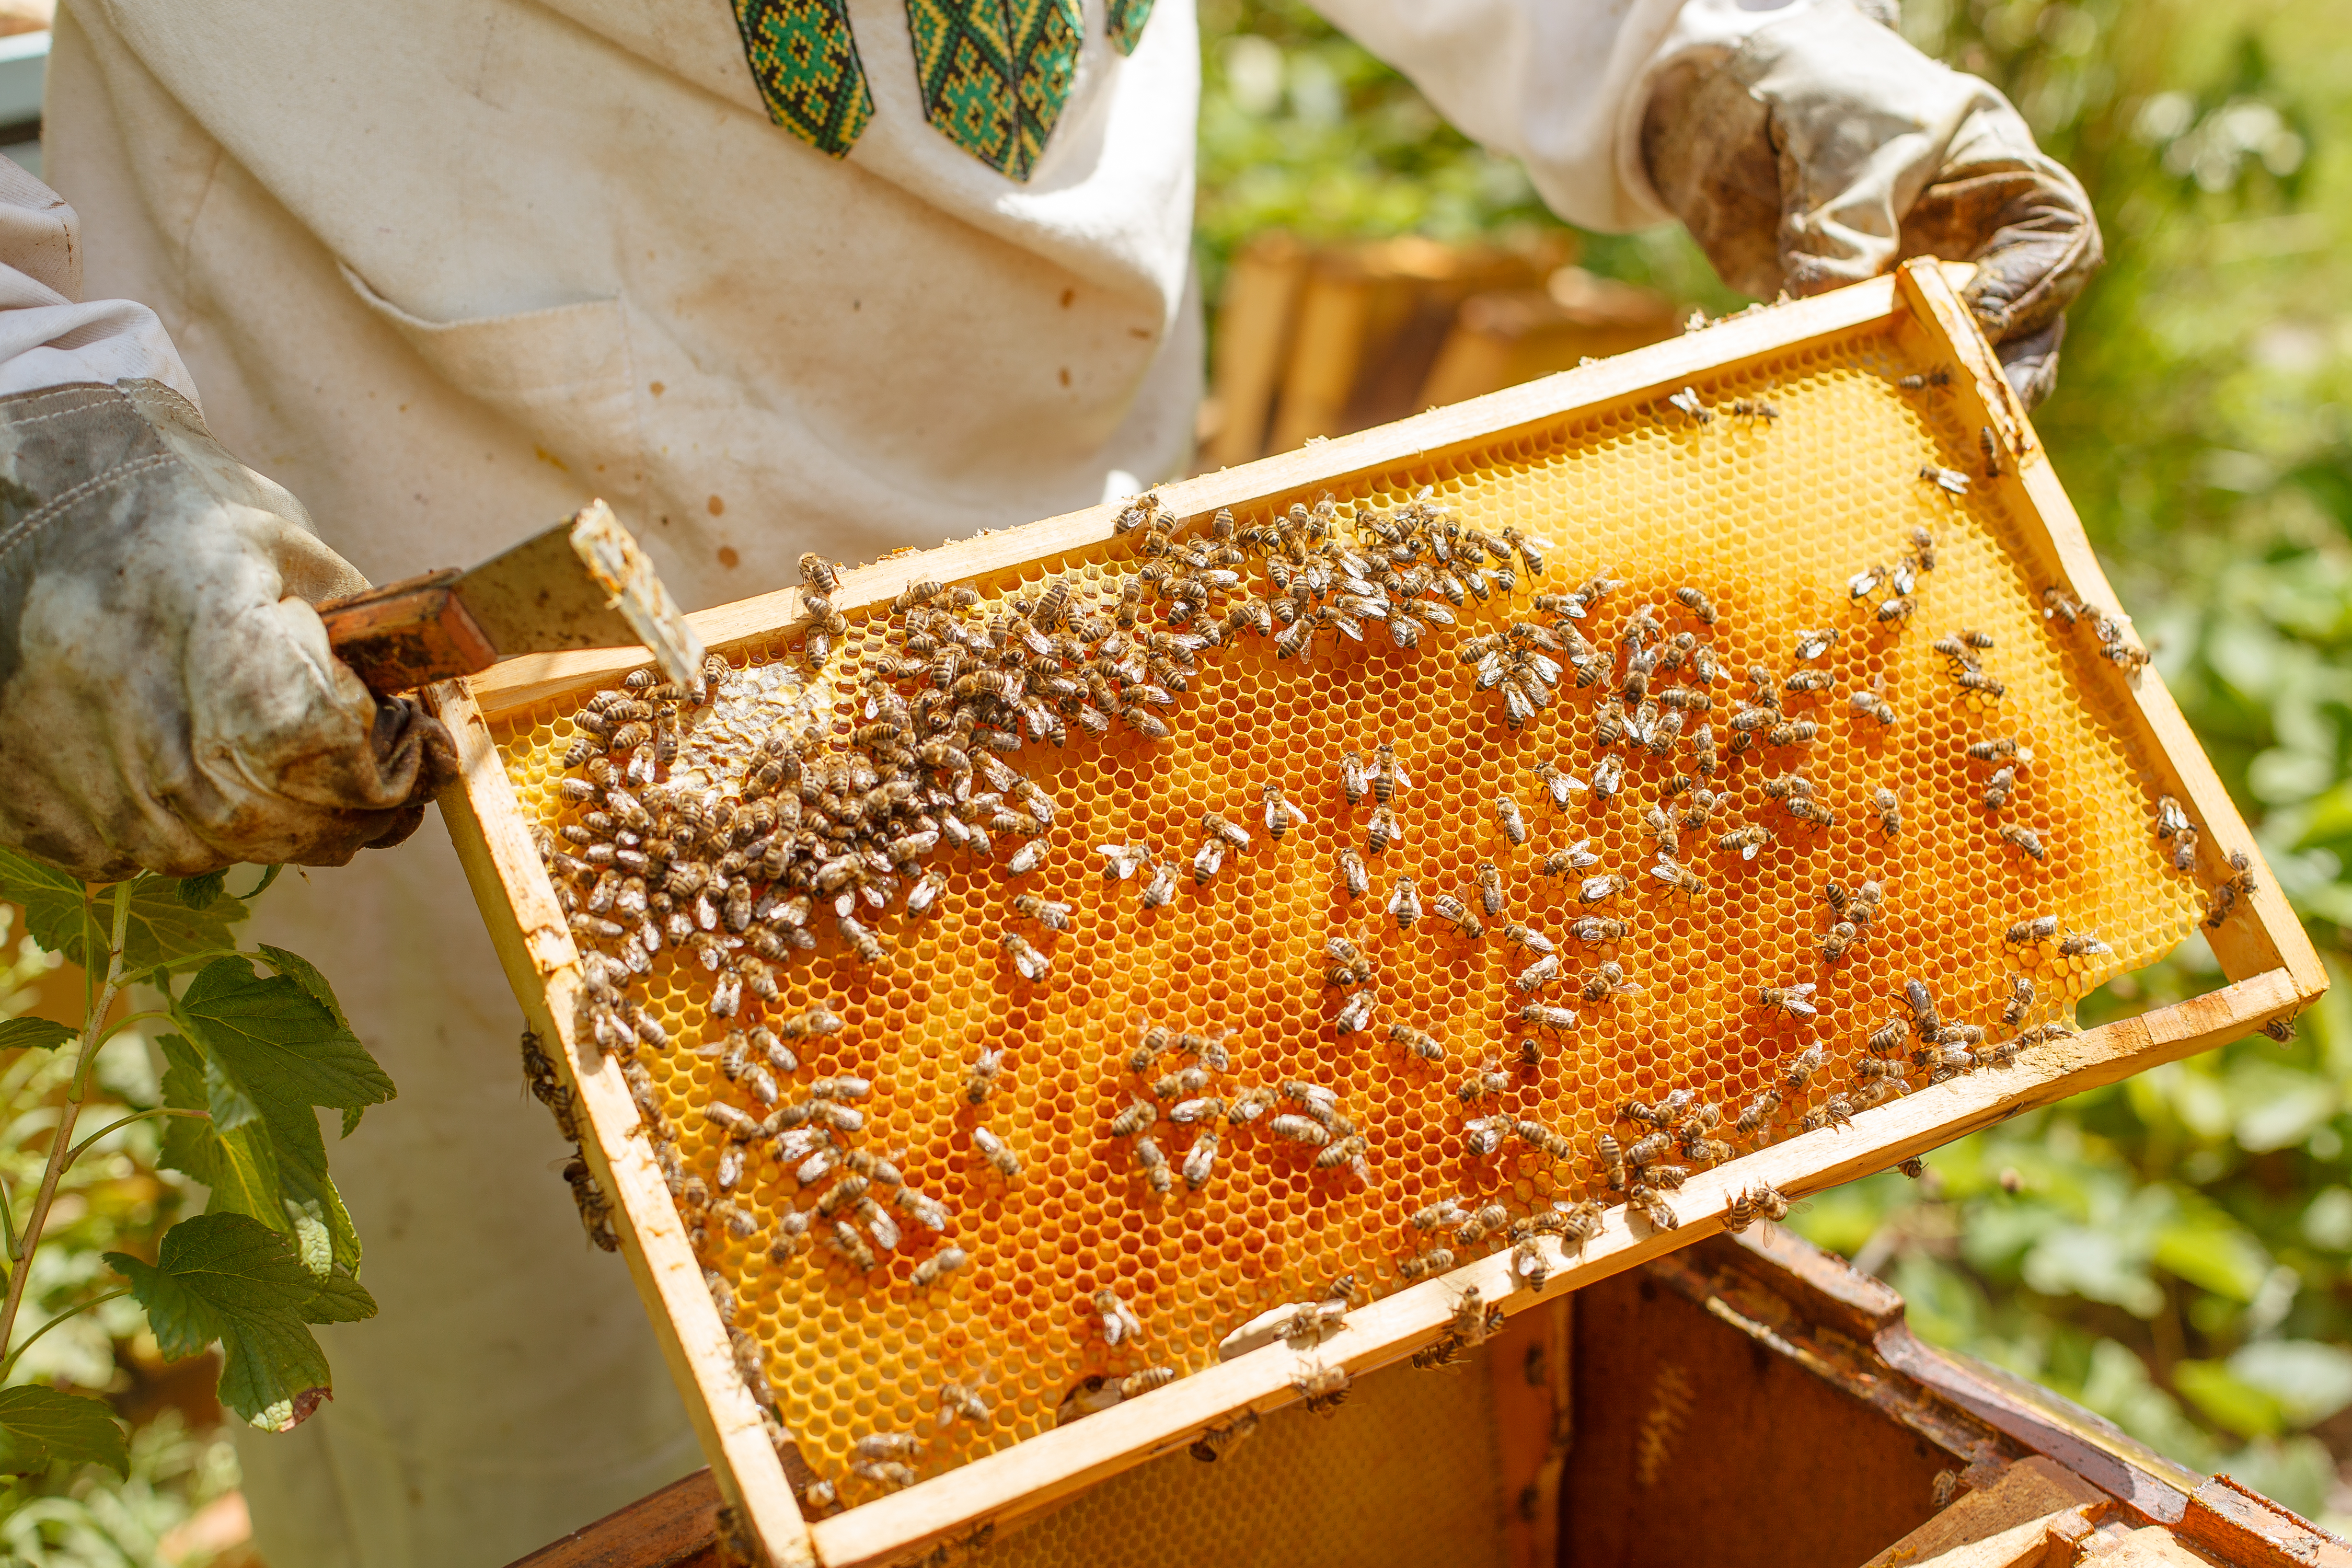 Honey Industry Keeps Buzzing Despite COVID